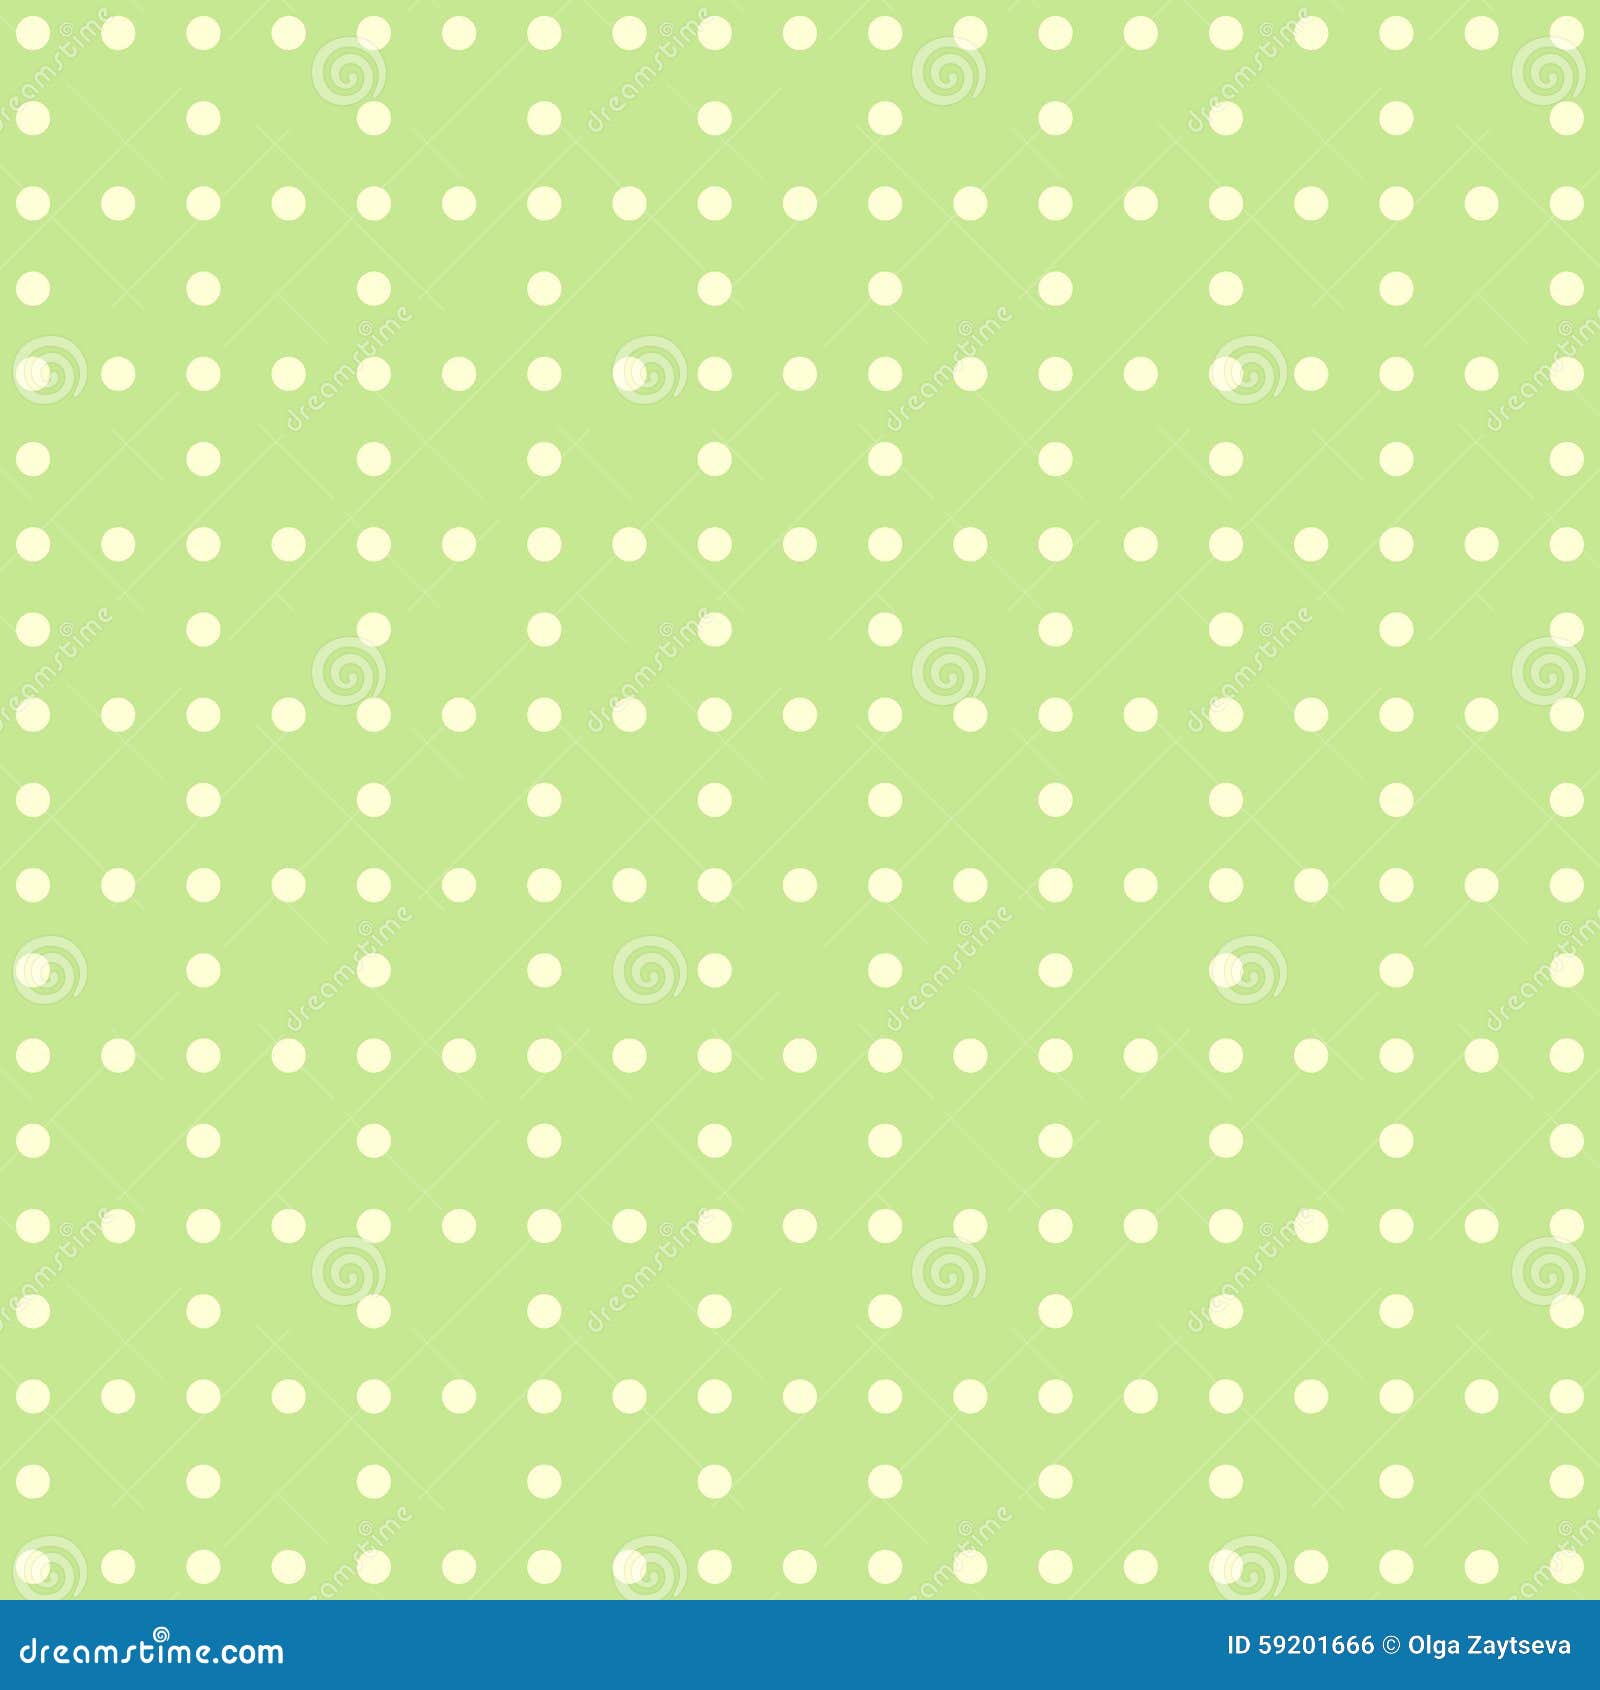 Retro Green Polka Dot Pattern Stock Illustration - Illustration of ...